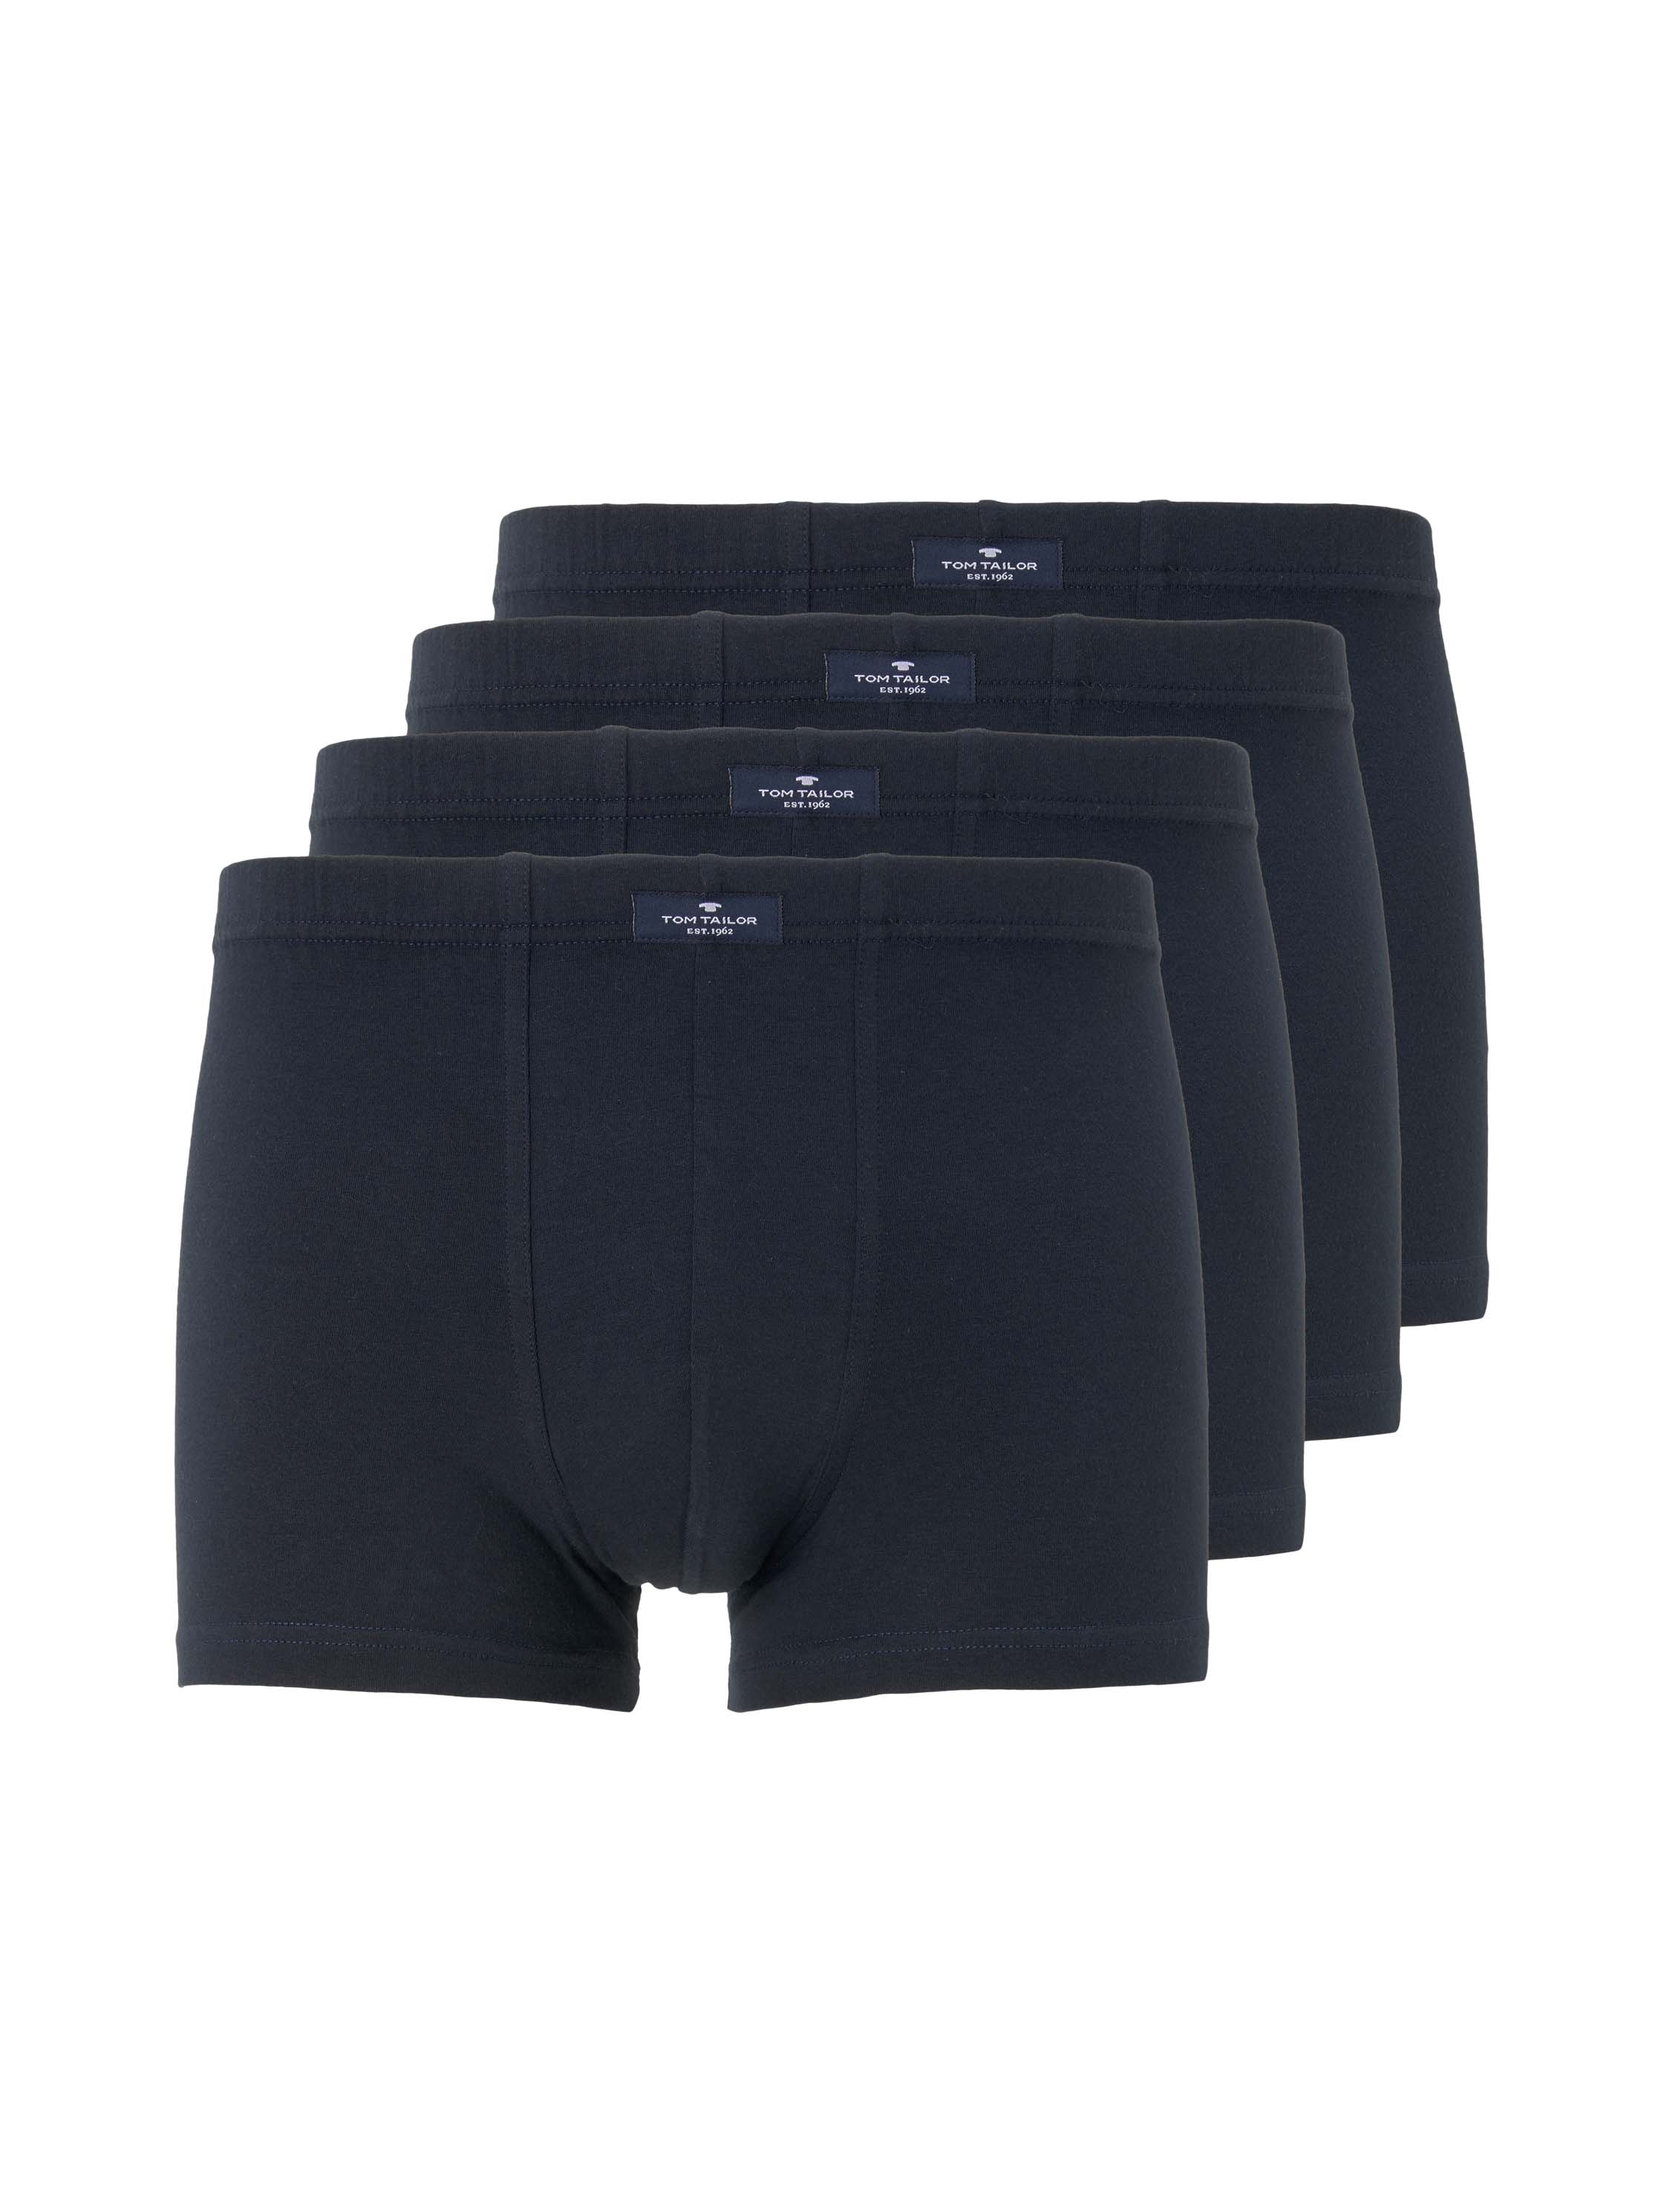 Pants 4er Pack, blau-dunkel-uni